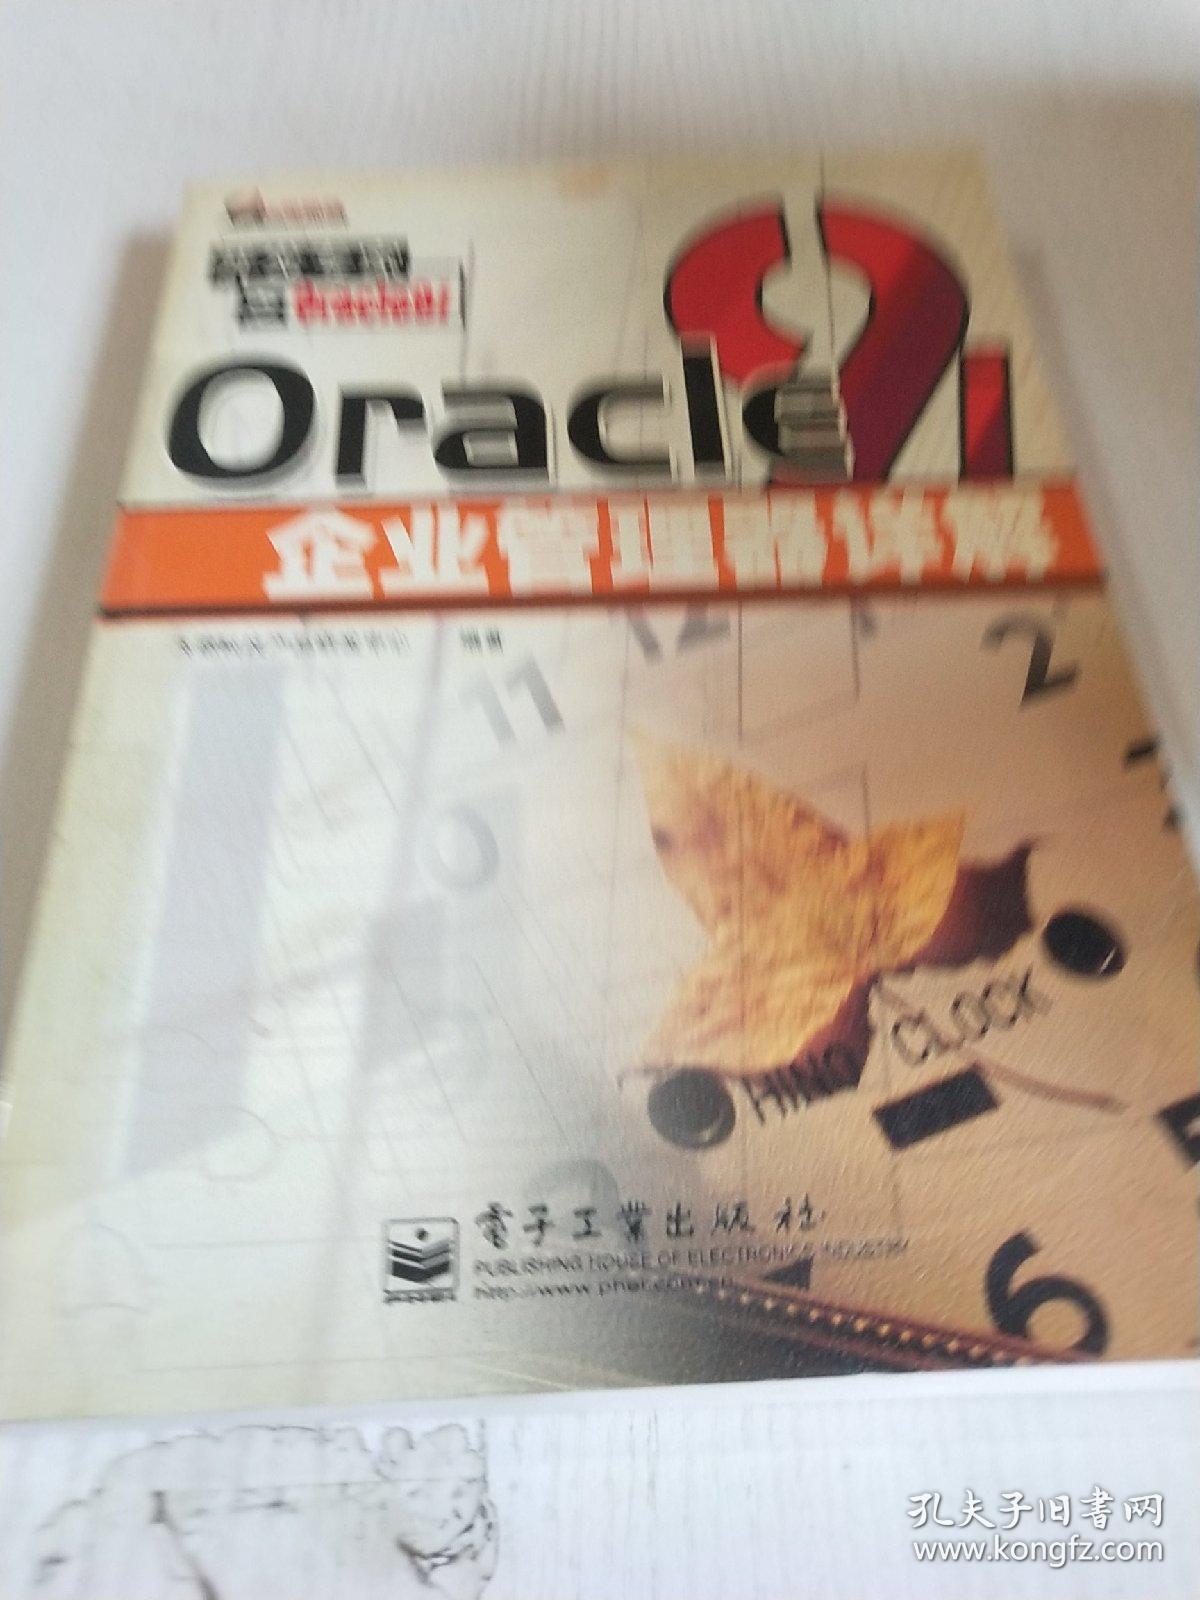 Oracle 企业管理器详解。